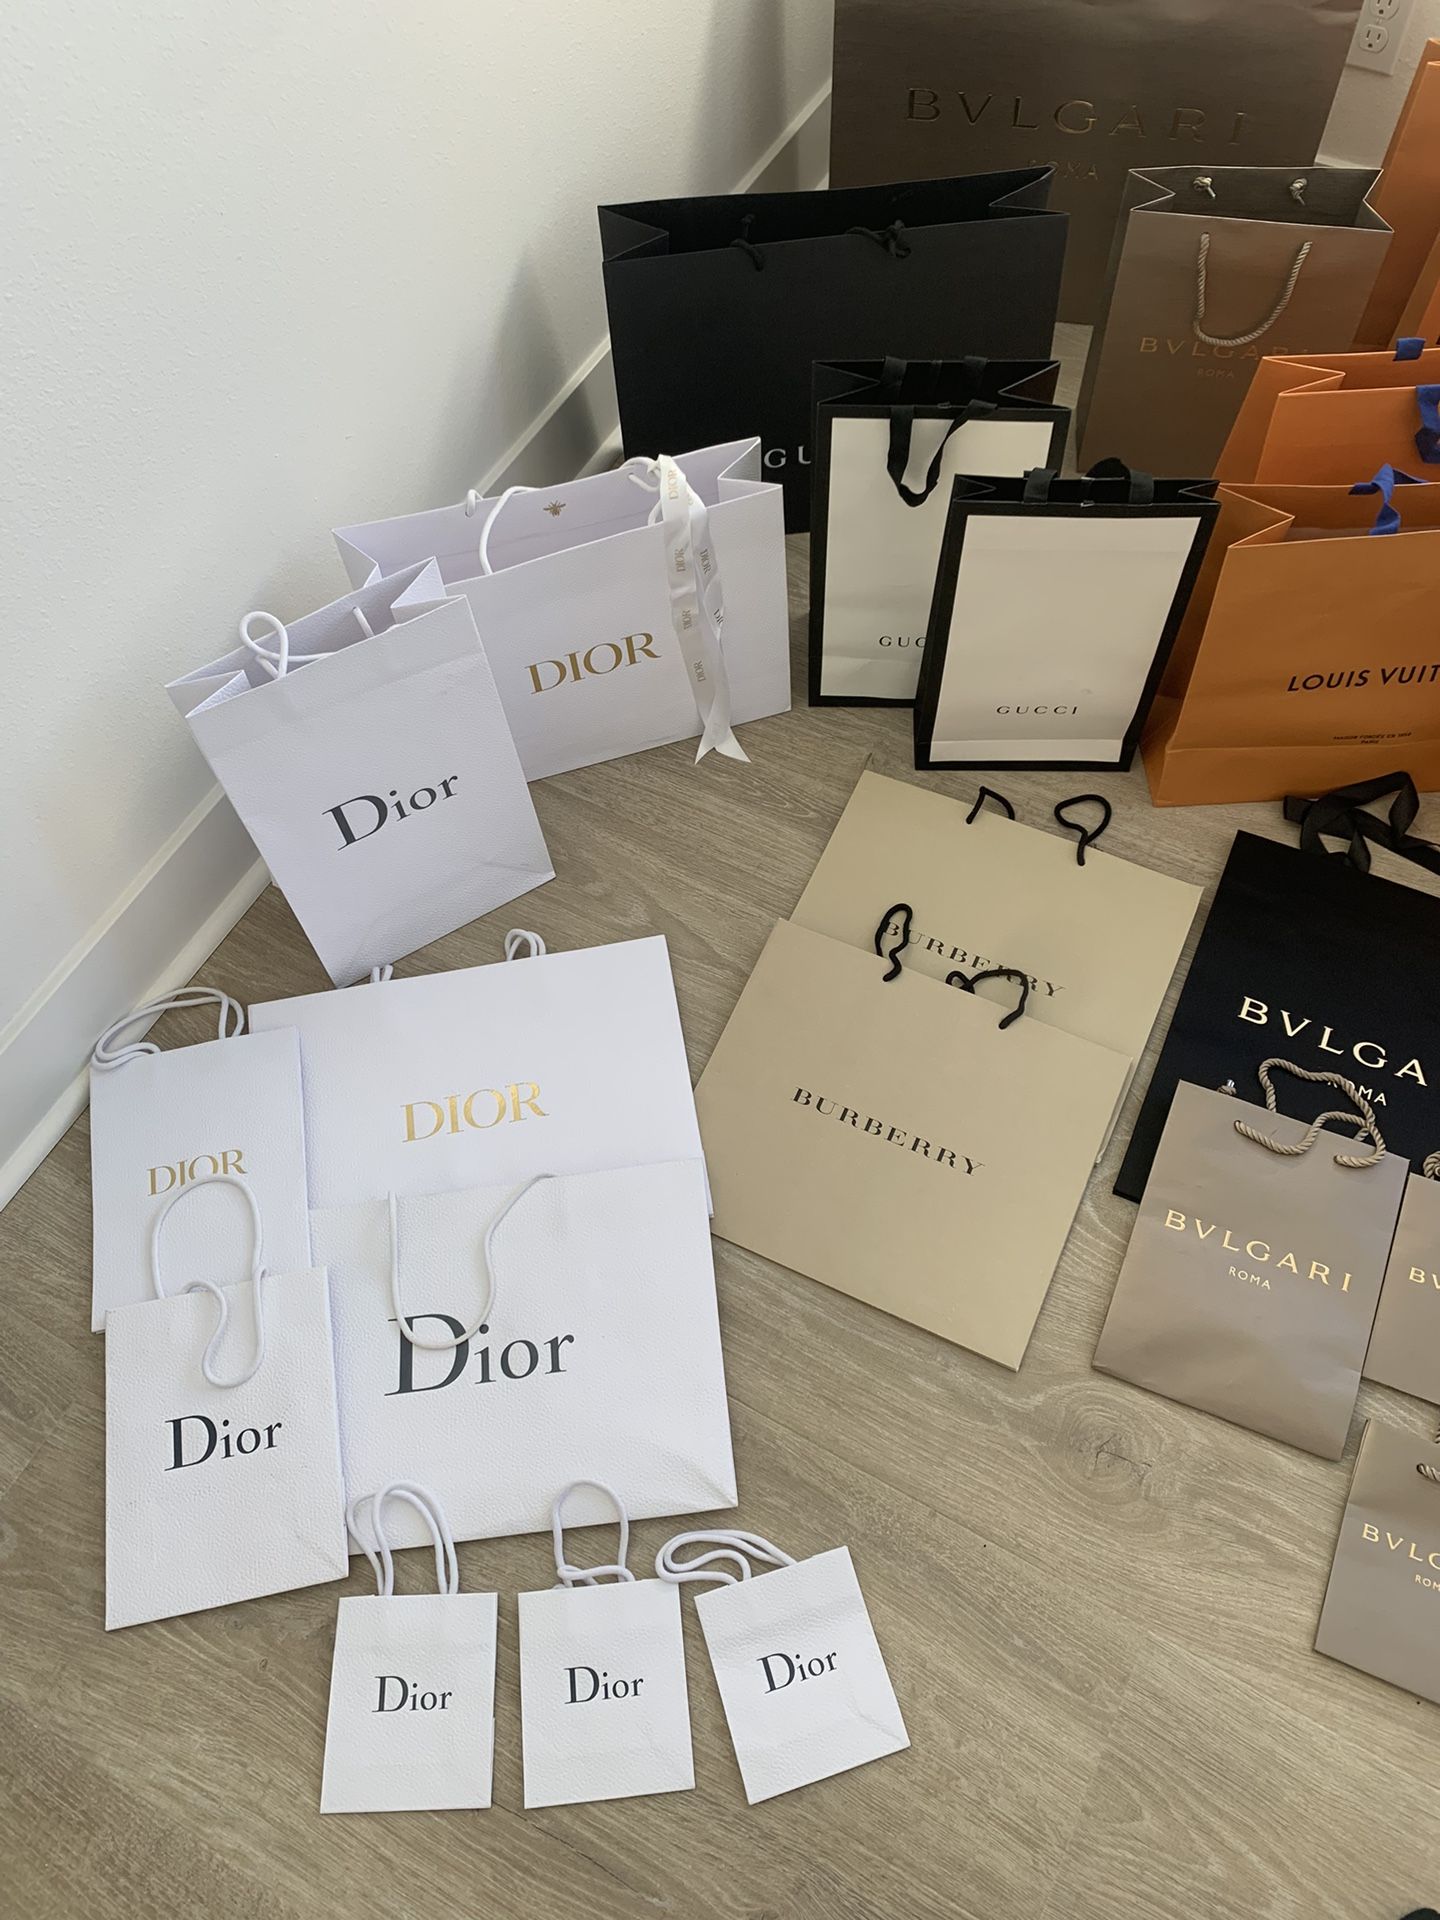 Luxury Brand Shopping Gift Paper Bag Set Hermes Louis Vuitton Gucci etc.  14130